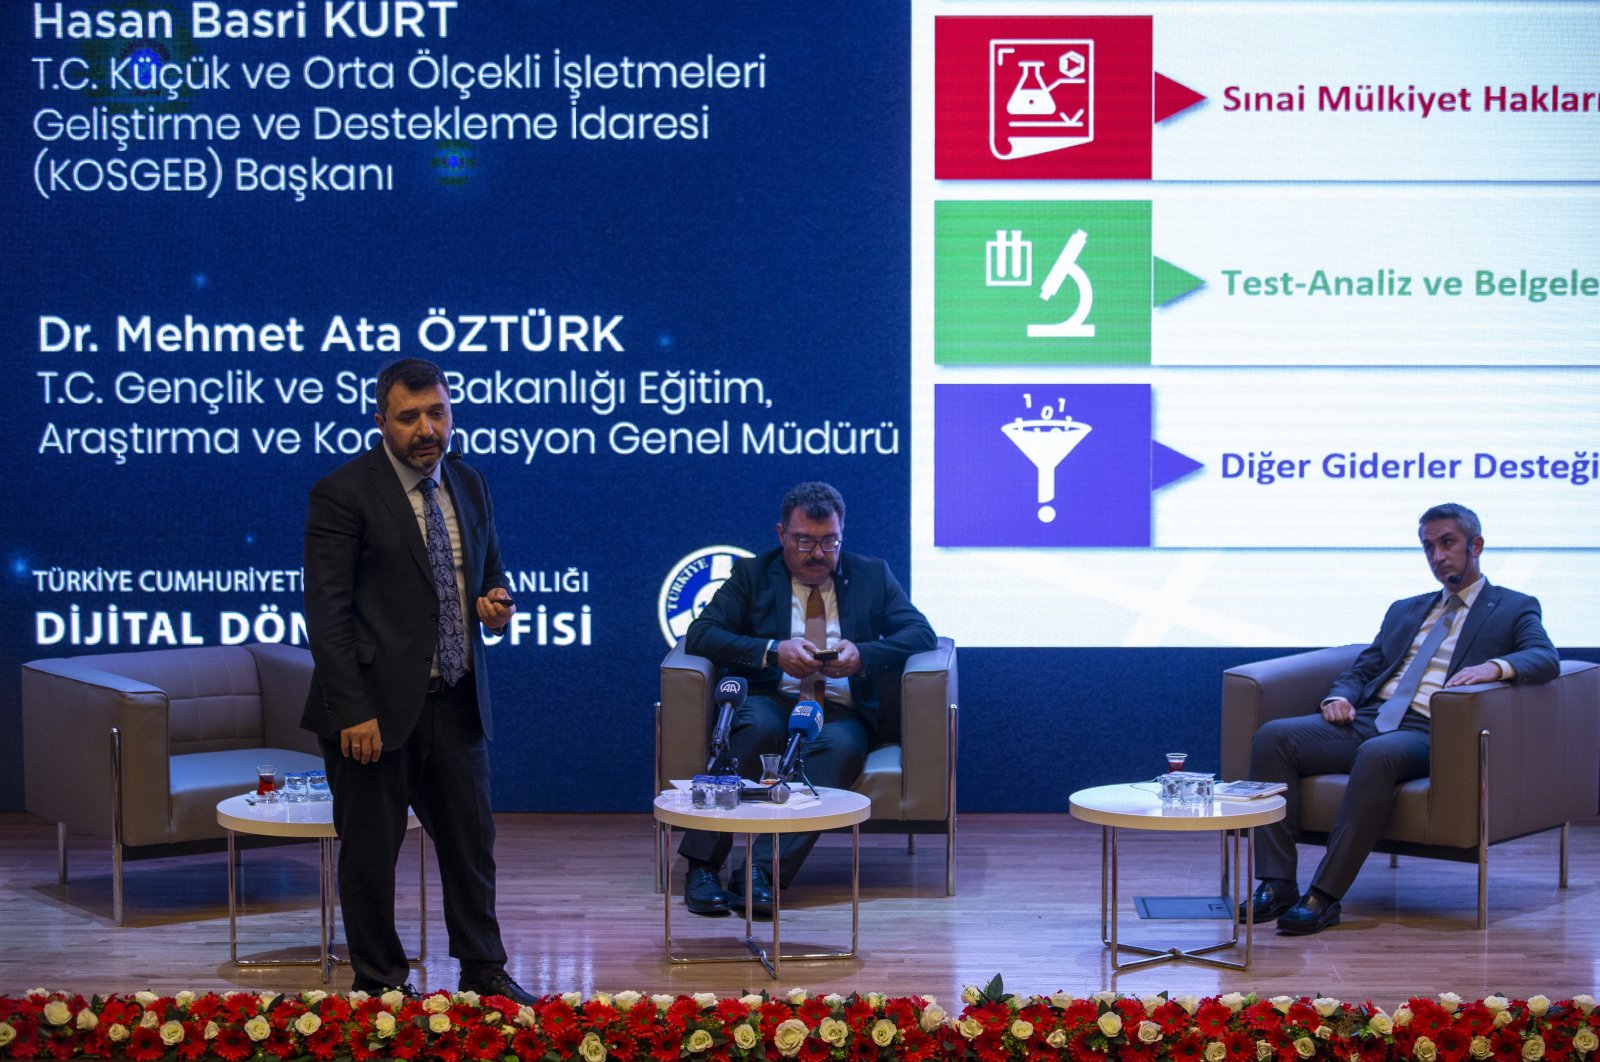 Turkey’s Small and Medium-Sized Enterprises Development Organization (KOSGEB) Chair Hasan Basri Kurt speaks during an event in Ankara, Turkey, May 16, 2022. (AA Photo)